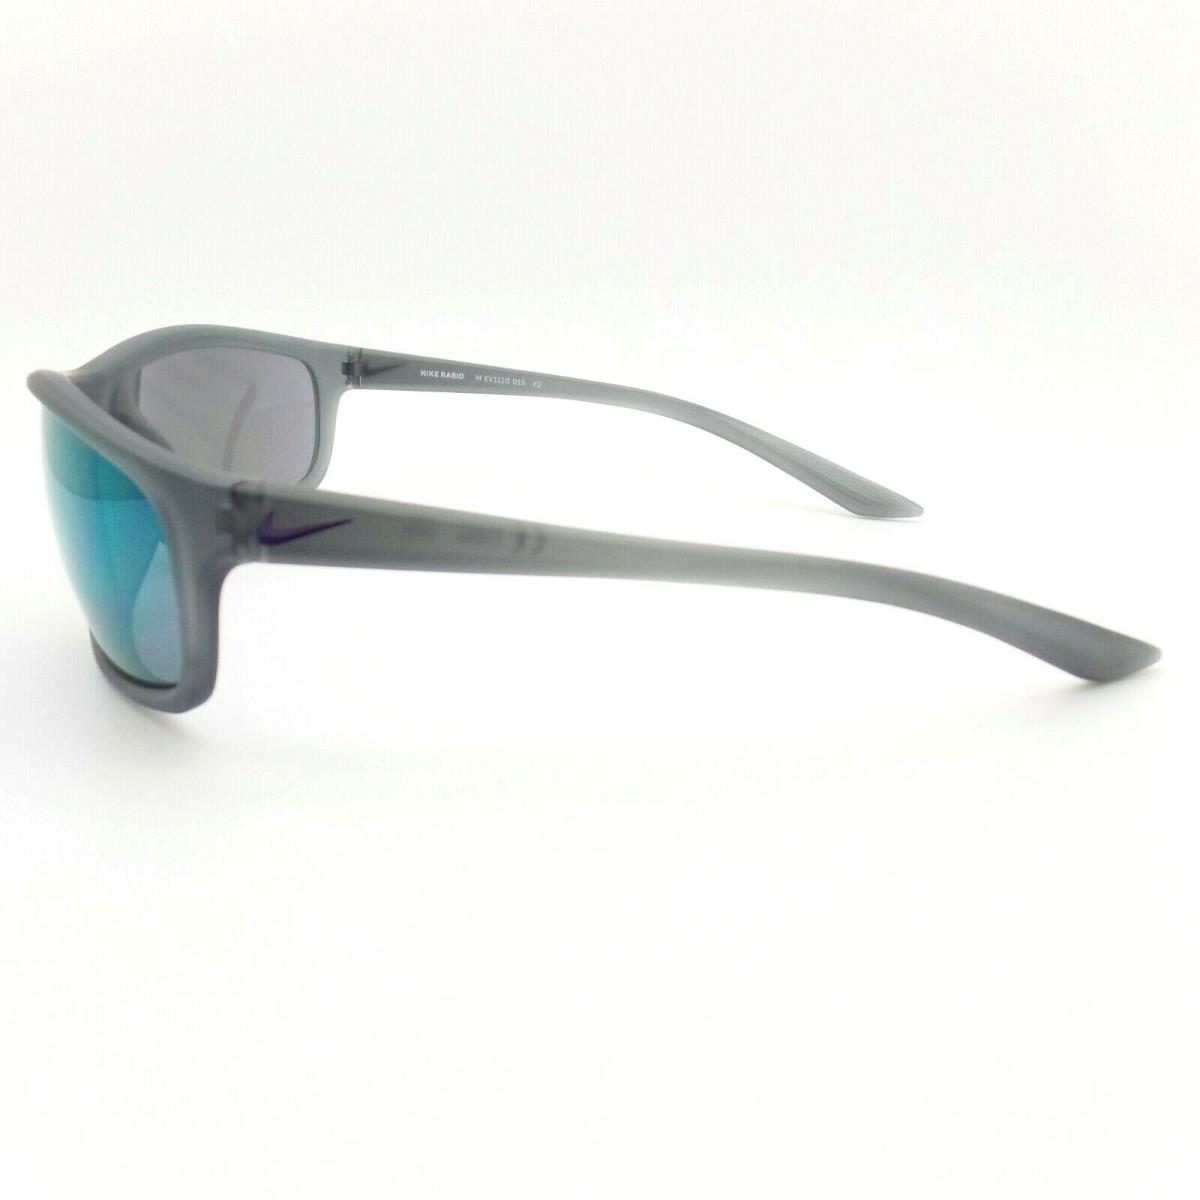 Nike sunglasses Rabid - Matte Anthracite Frame, Grey /VioletMirror Lens 1